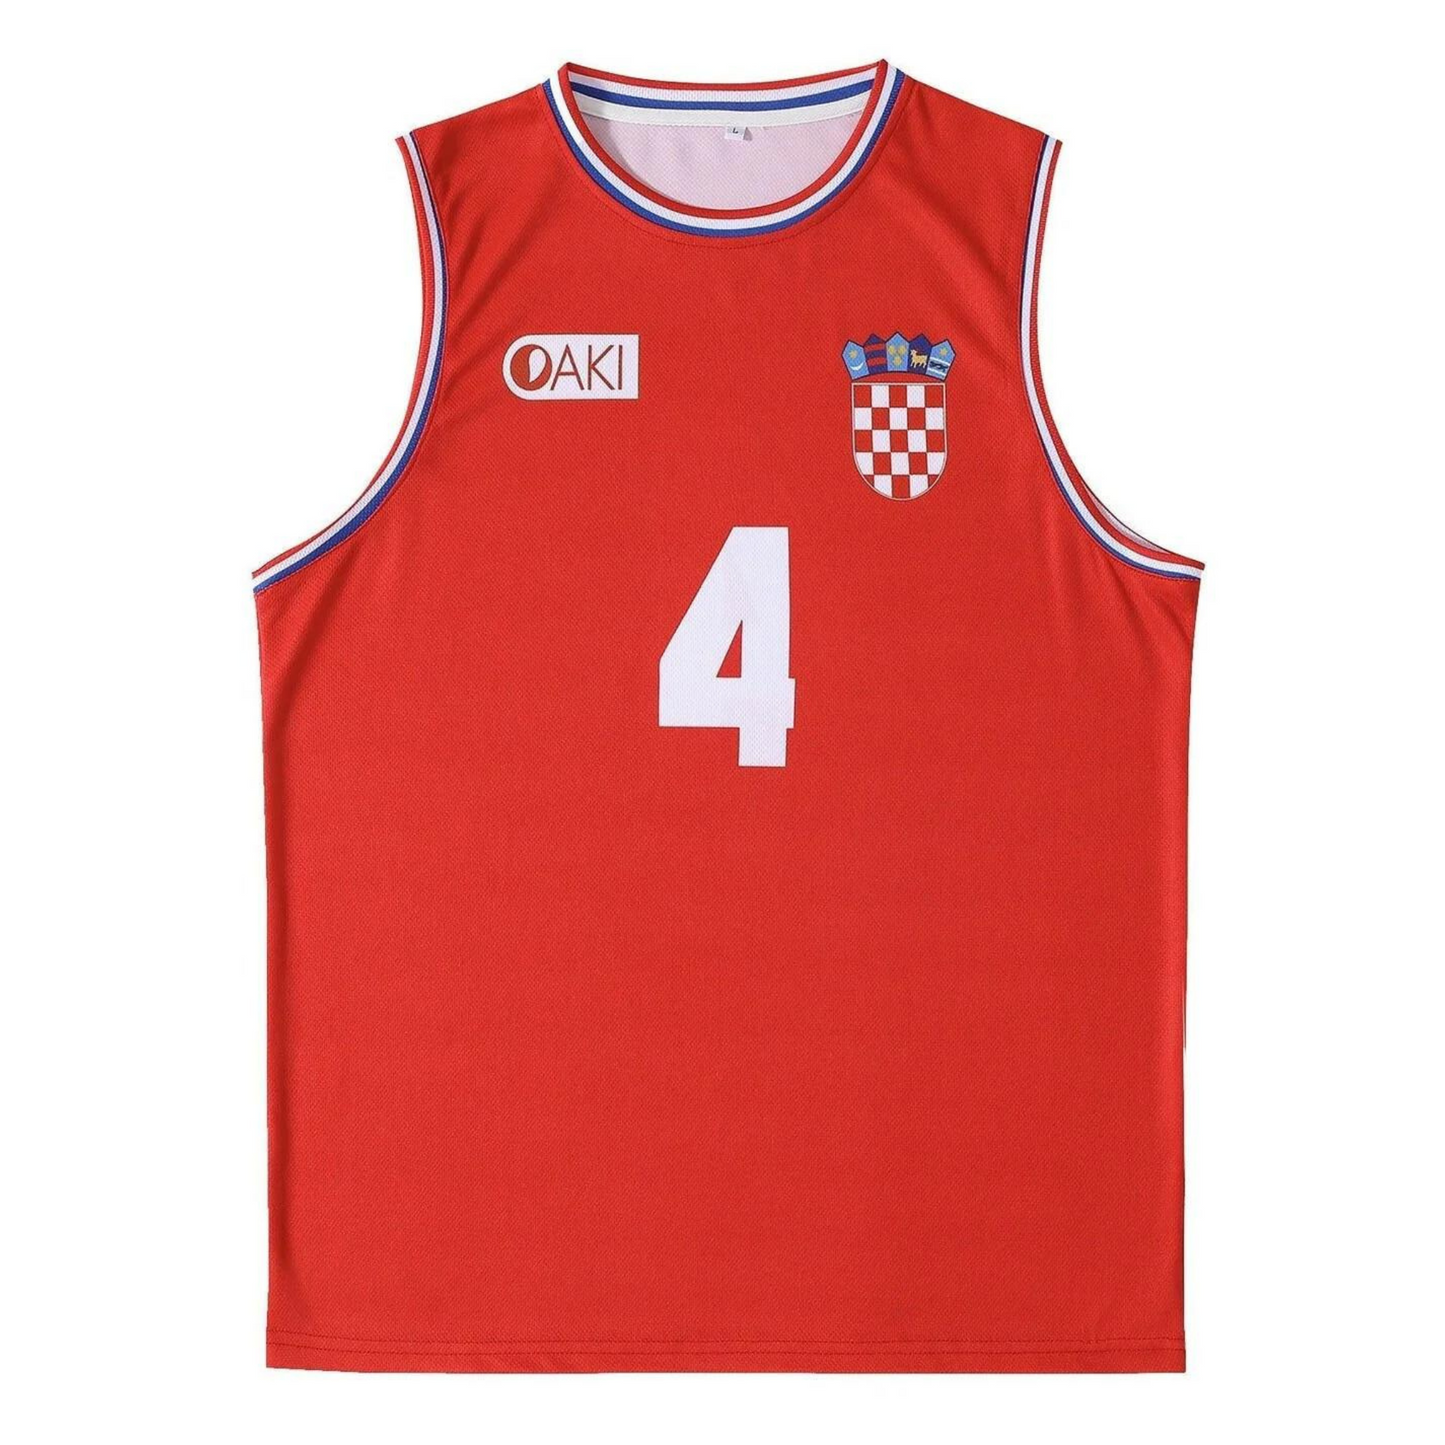 Drazen Petrovic Croatia National Team Basketball Jersey Retro